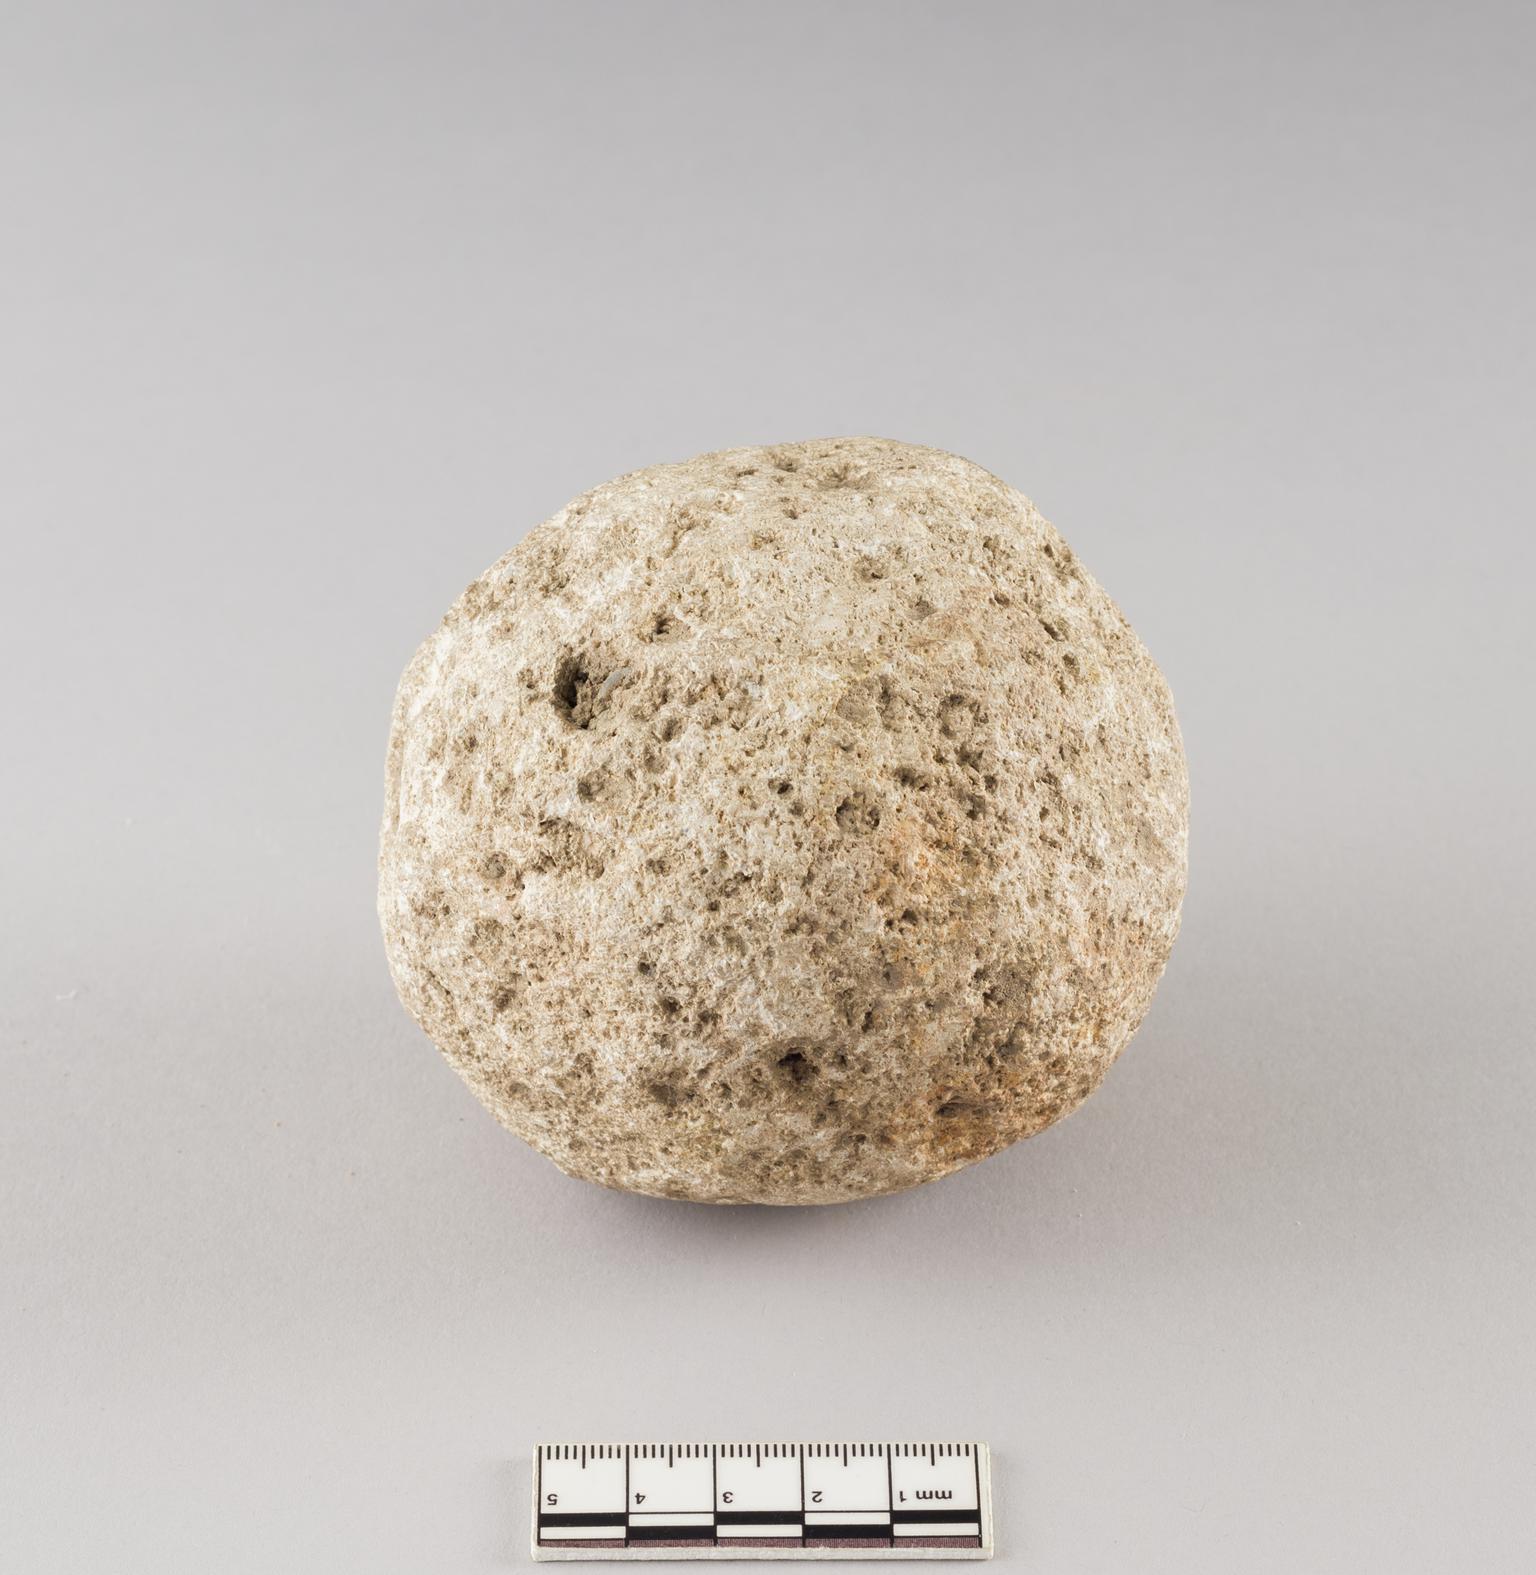 Roman Bath Stone ballista ball